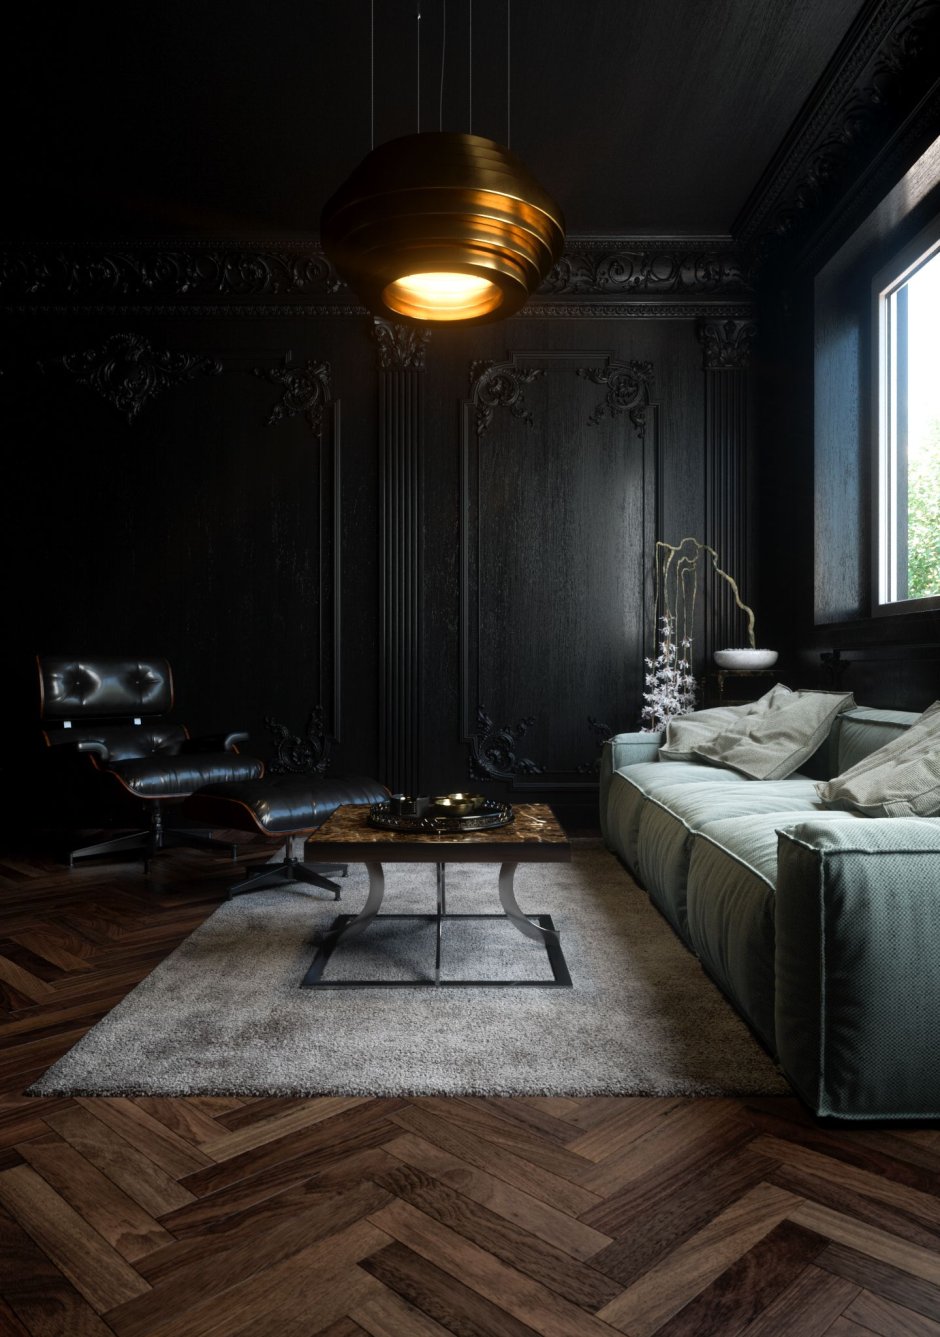 Interior in dark colors